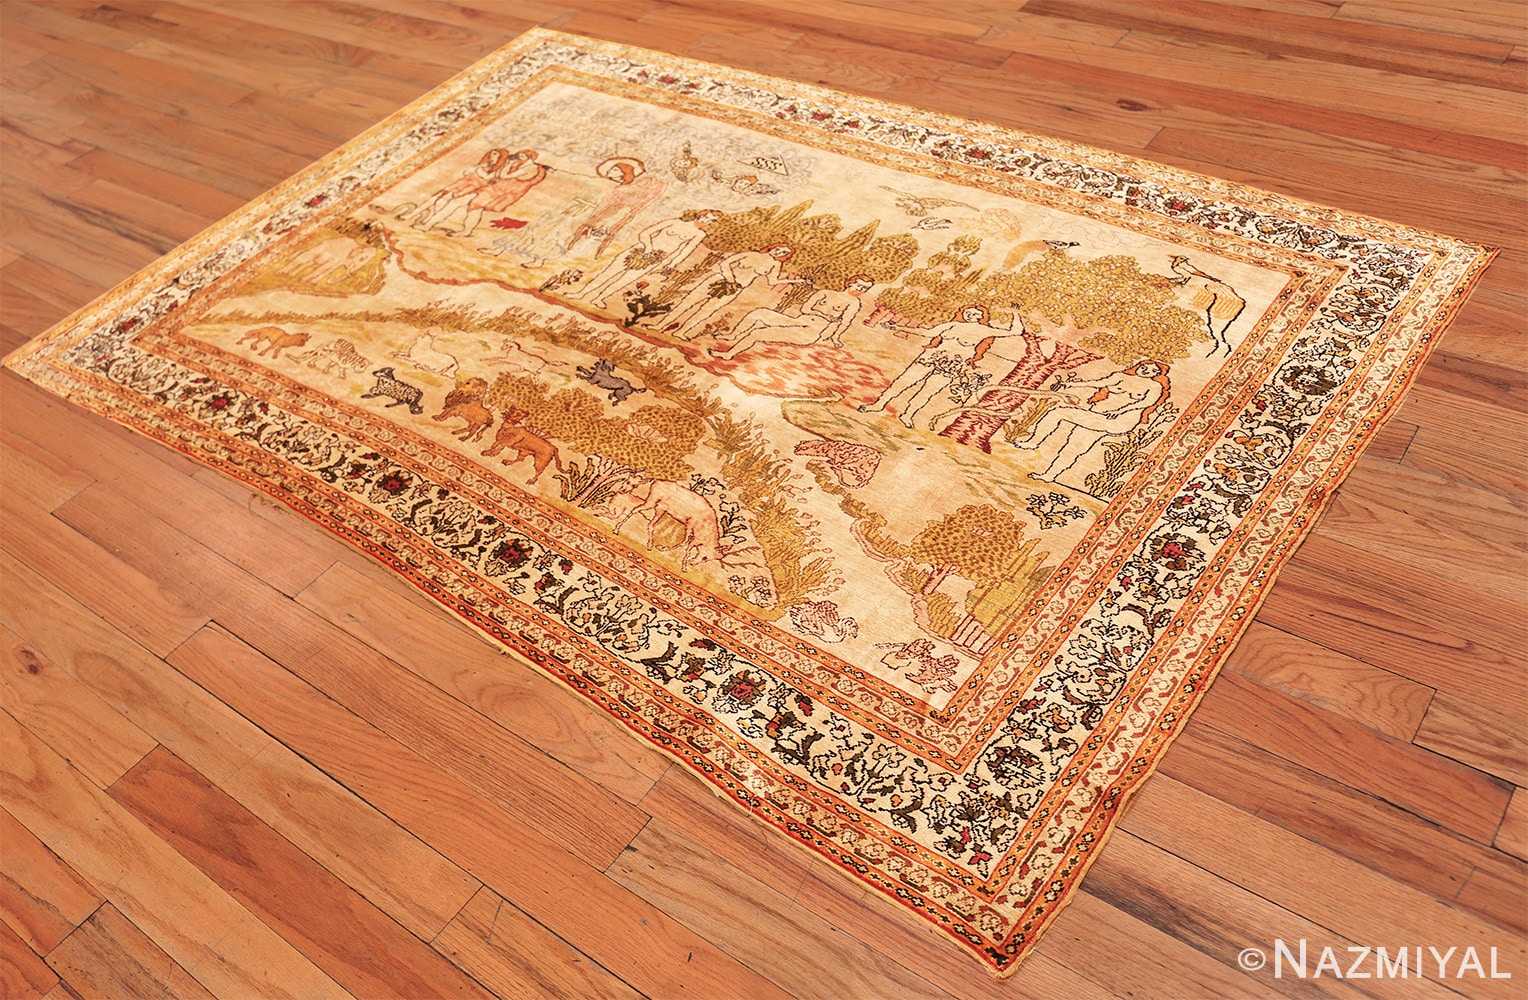 Full Fine Biblical Adam and eve scene Turkish pictorial Antique silk rug 48890 by Nazmiyal